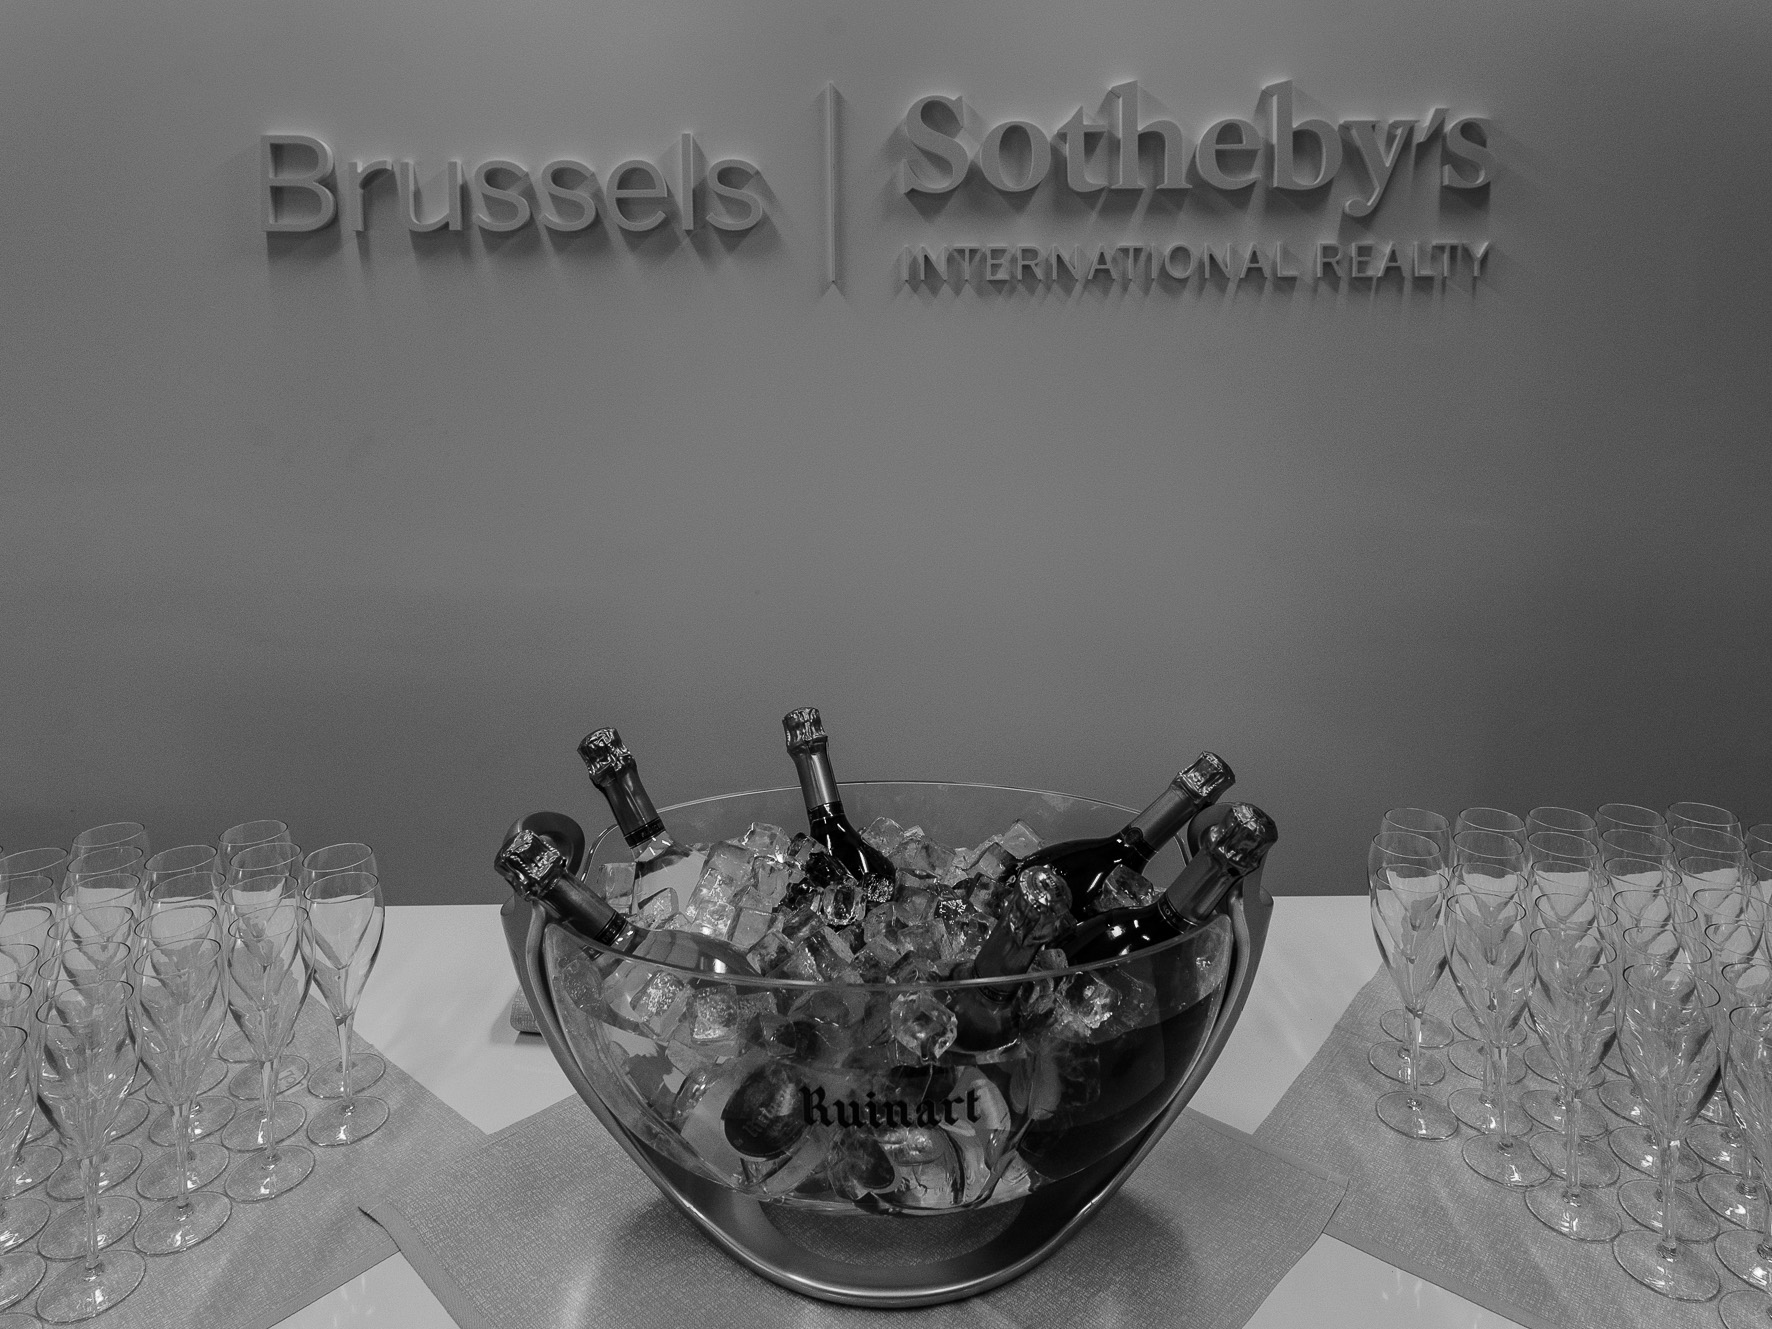 Belgium Sothebys Int. Realty Inauguration du bureau de Bruxelles